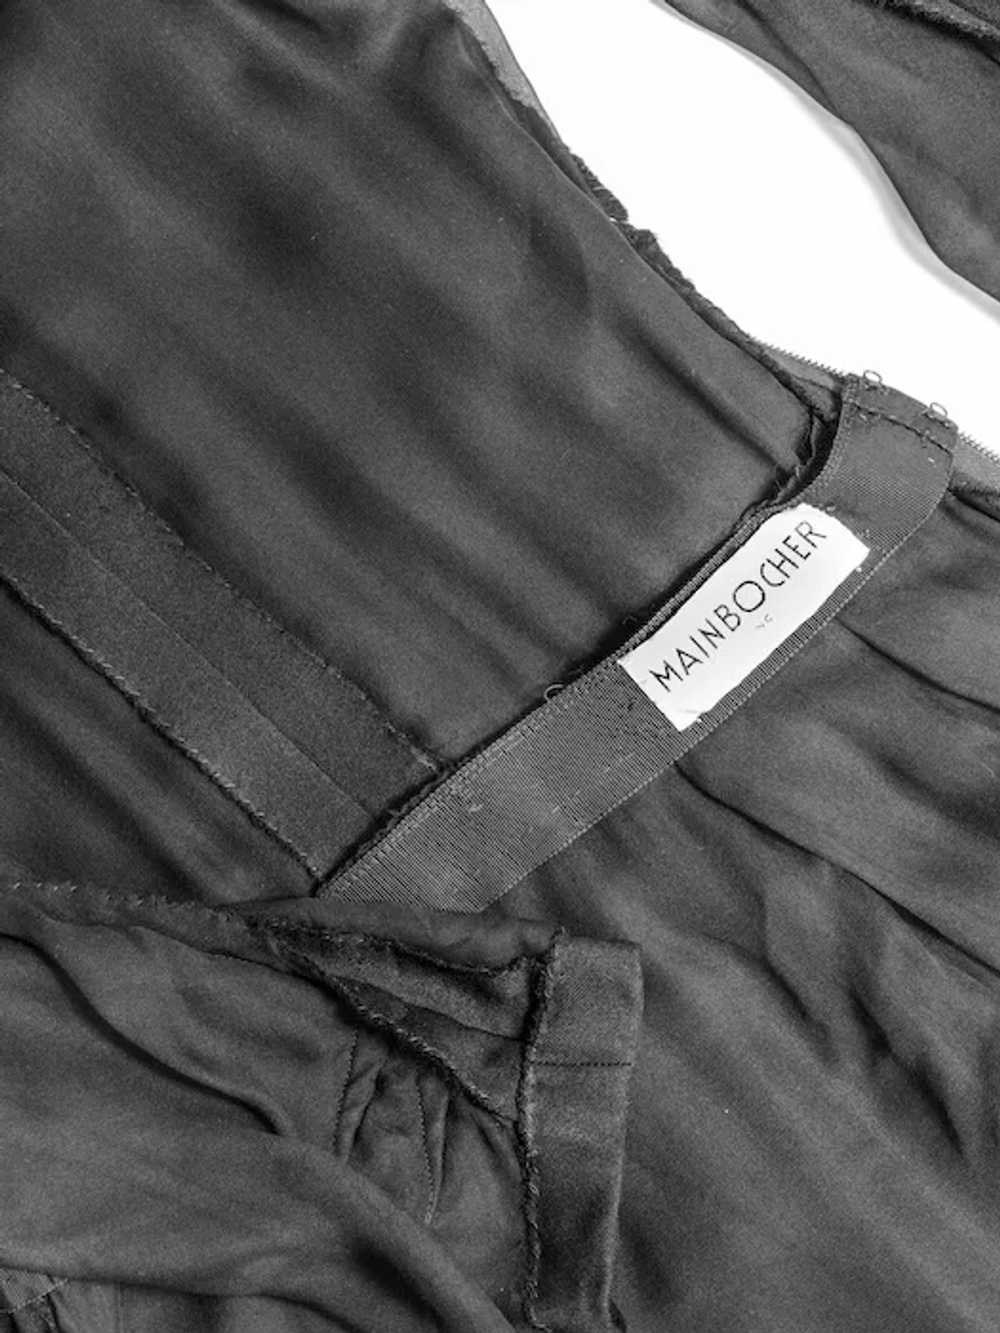 Mainbocher Classic Black Silk Jersey Dress ca 1960 - image 9